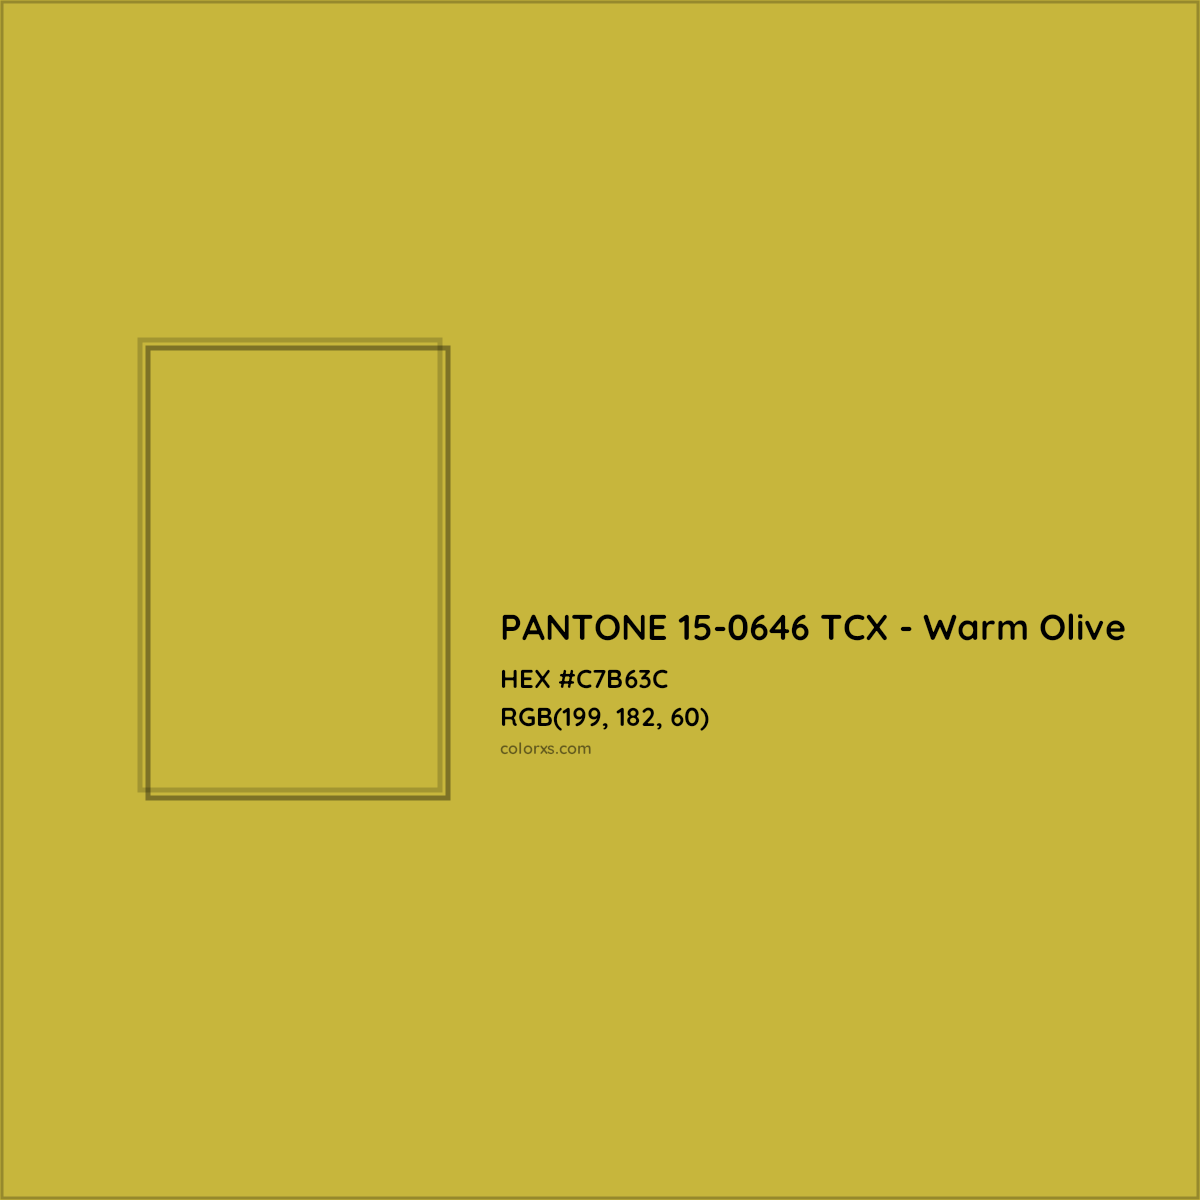 HEX #C7B63C PANTONE 15-0646 TCX - Warm Olive CMS Pantone TCX - Color Code